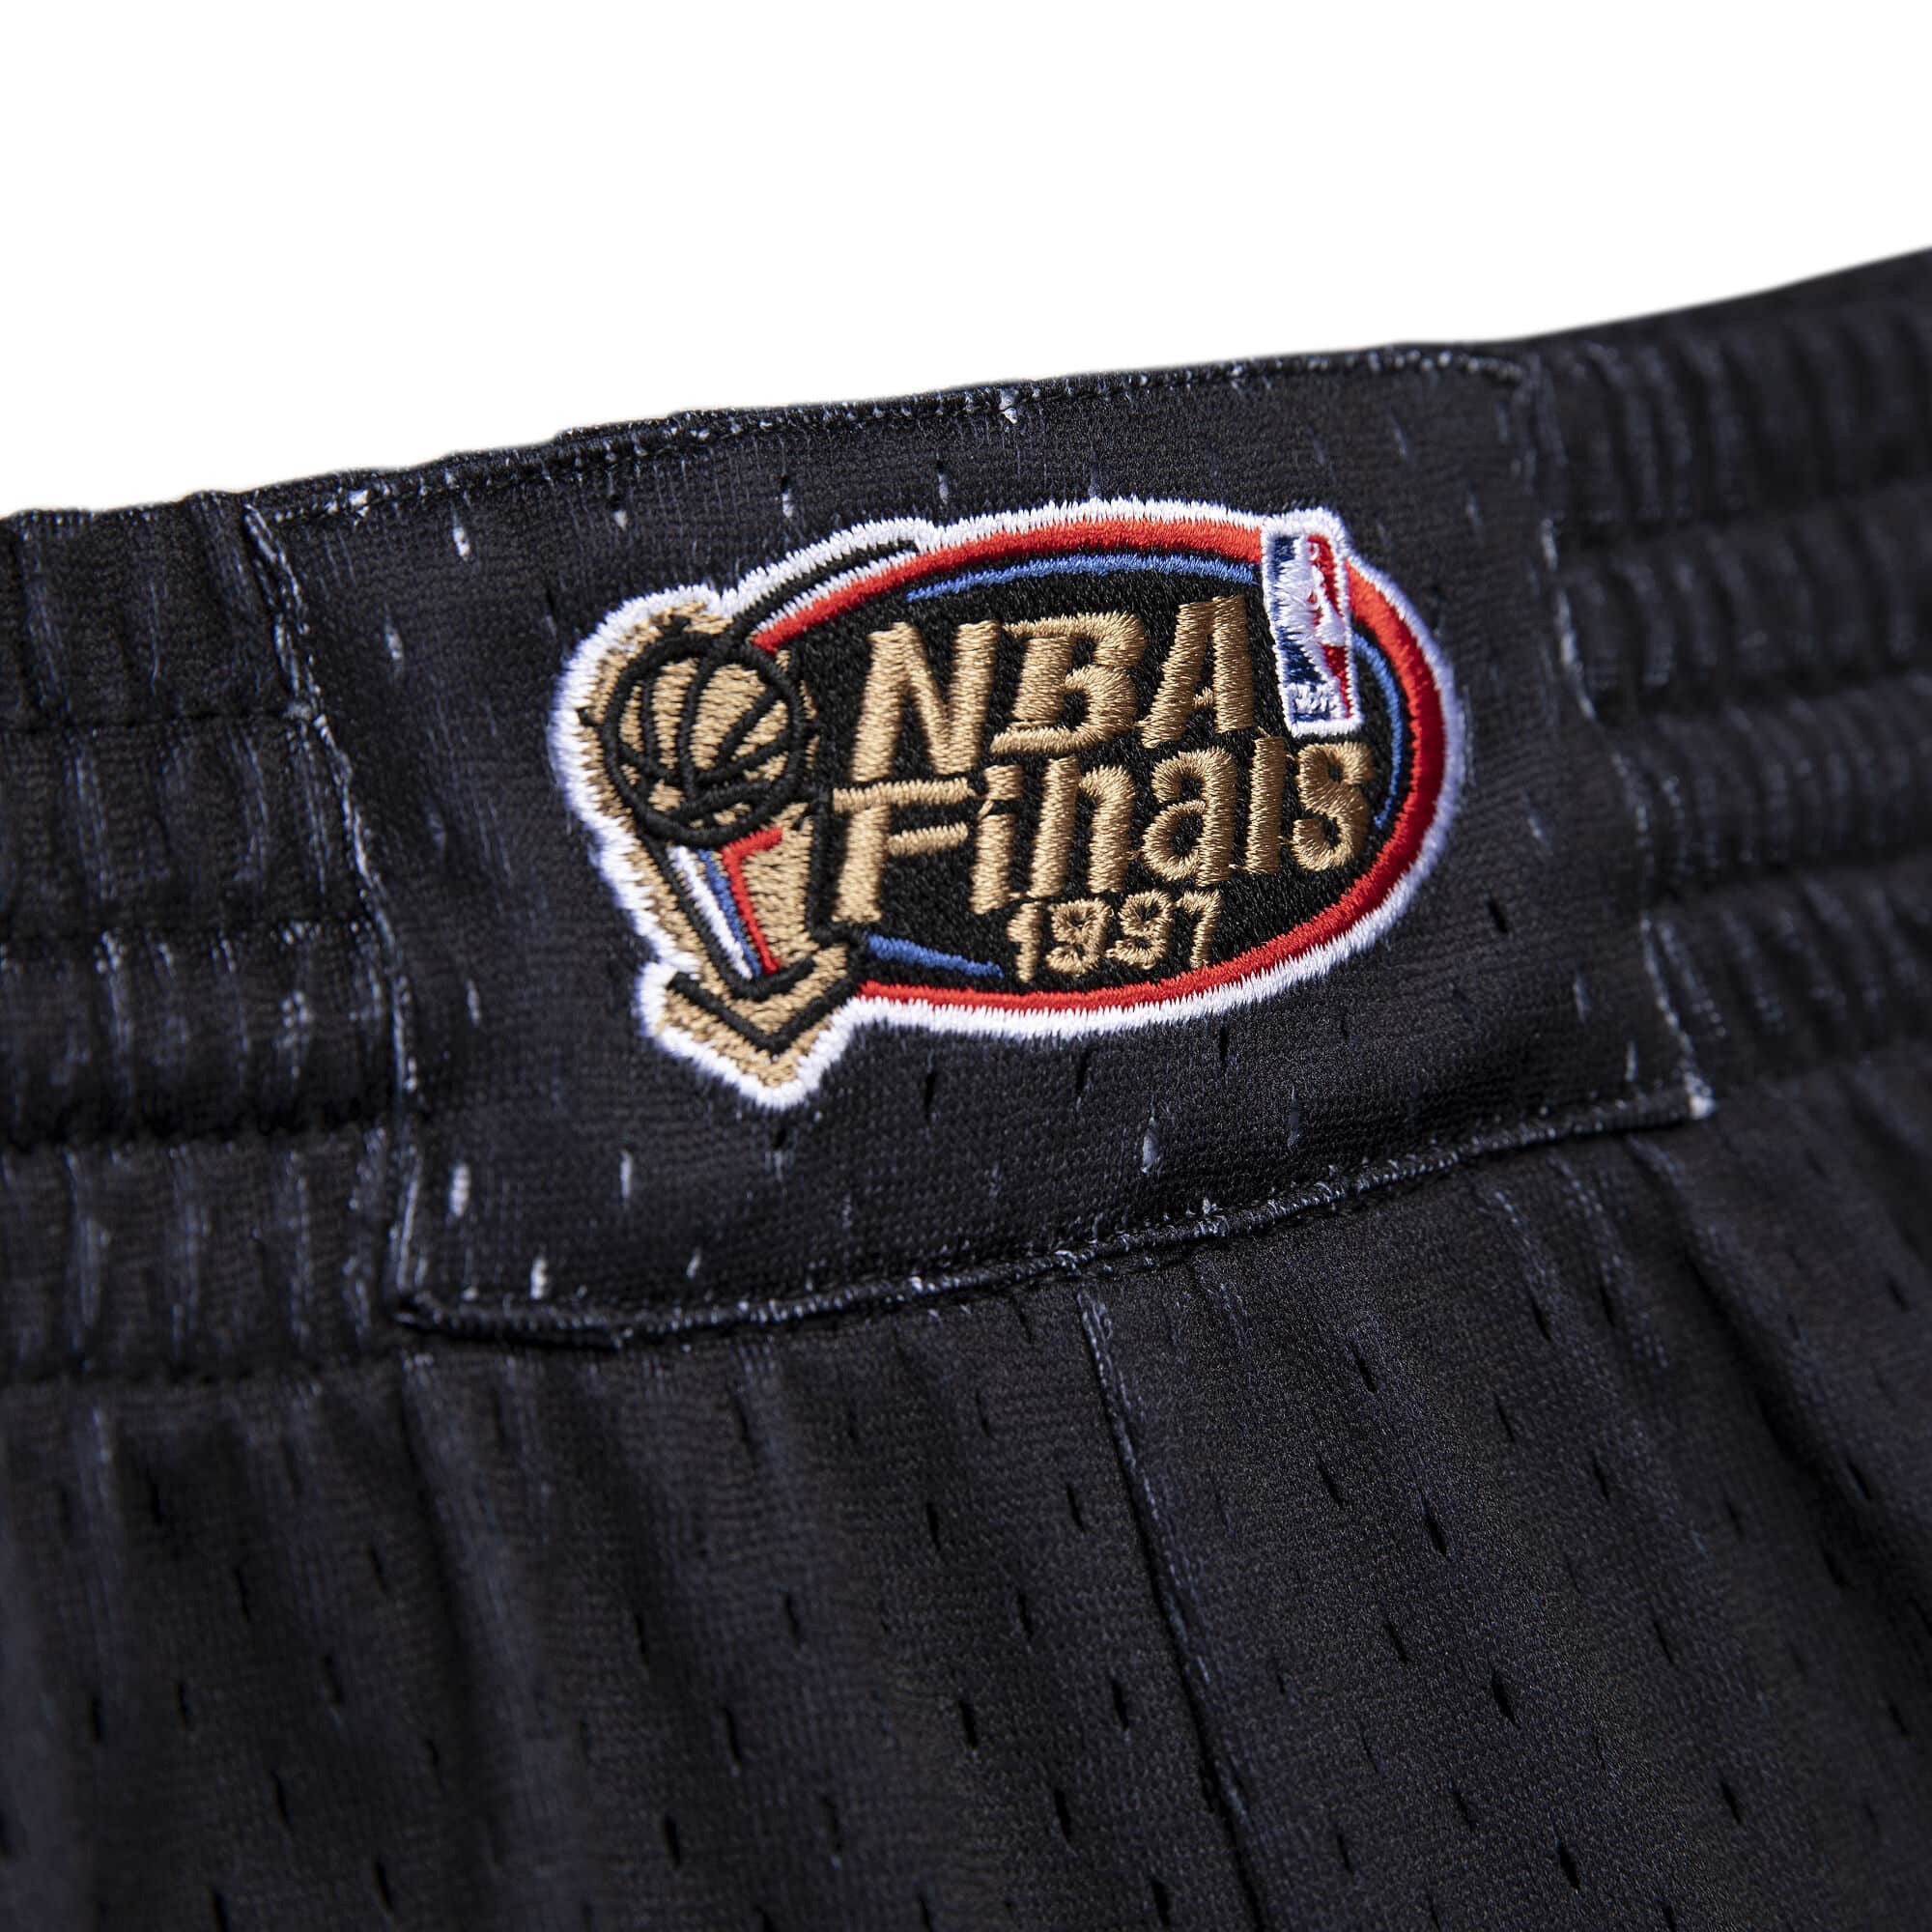 Mitchell & Ness NBA Flames Bulls 97 'Black' Swingman Shorts